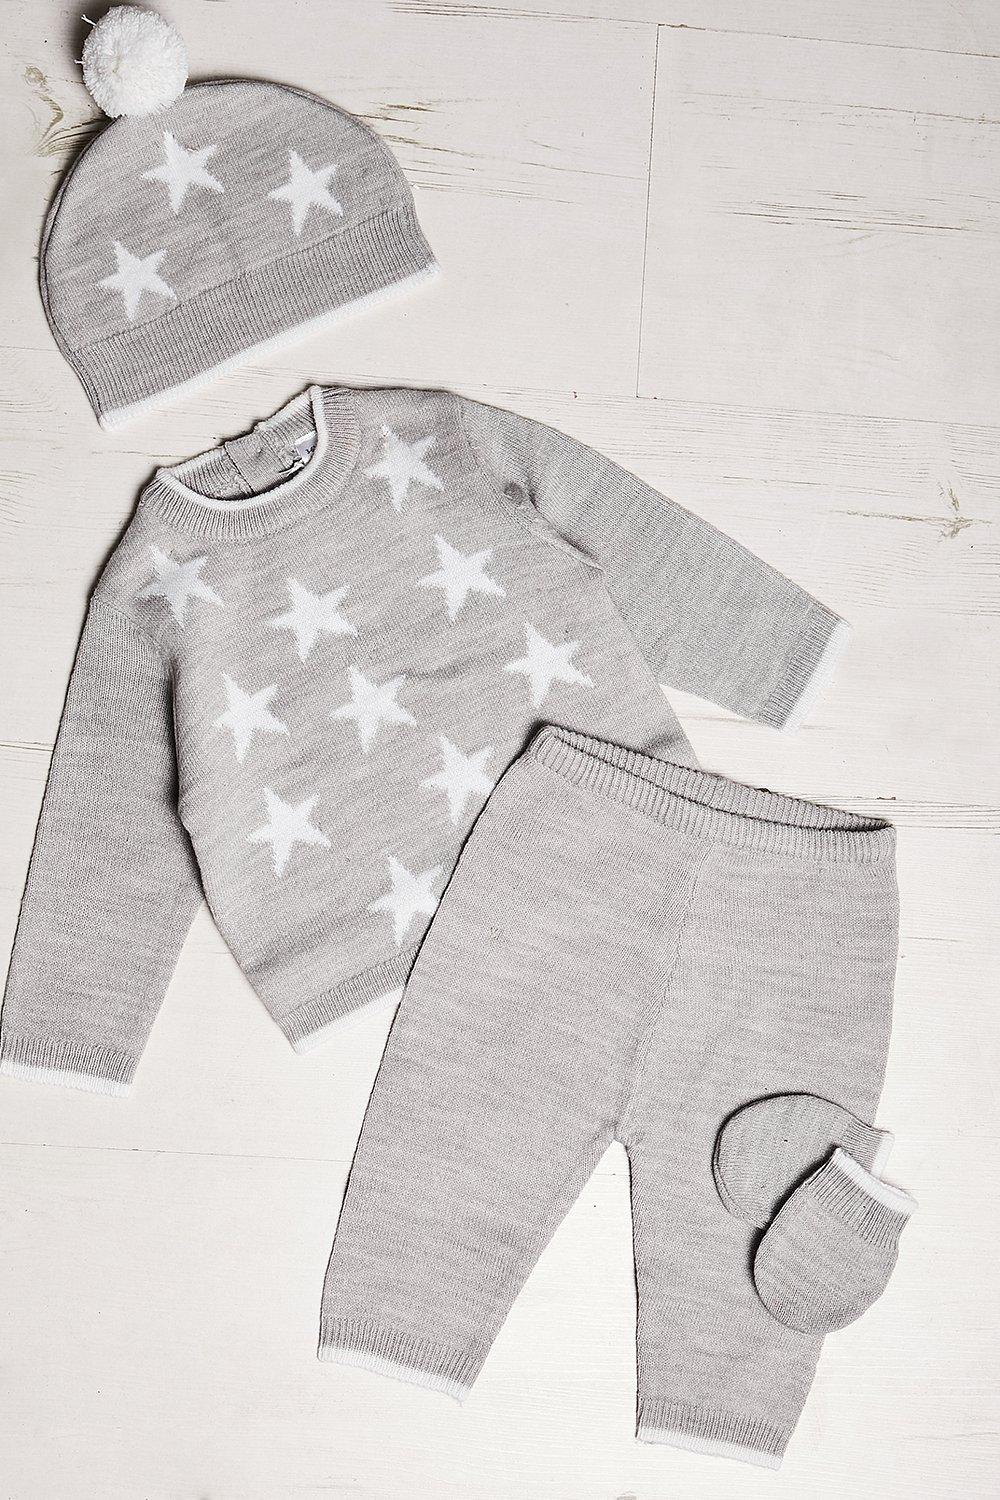 Baby Box Gift Set - 4 Piece Clothing - Star Print